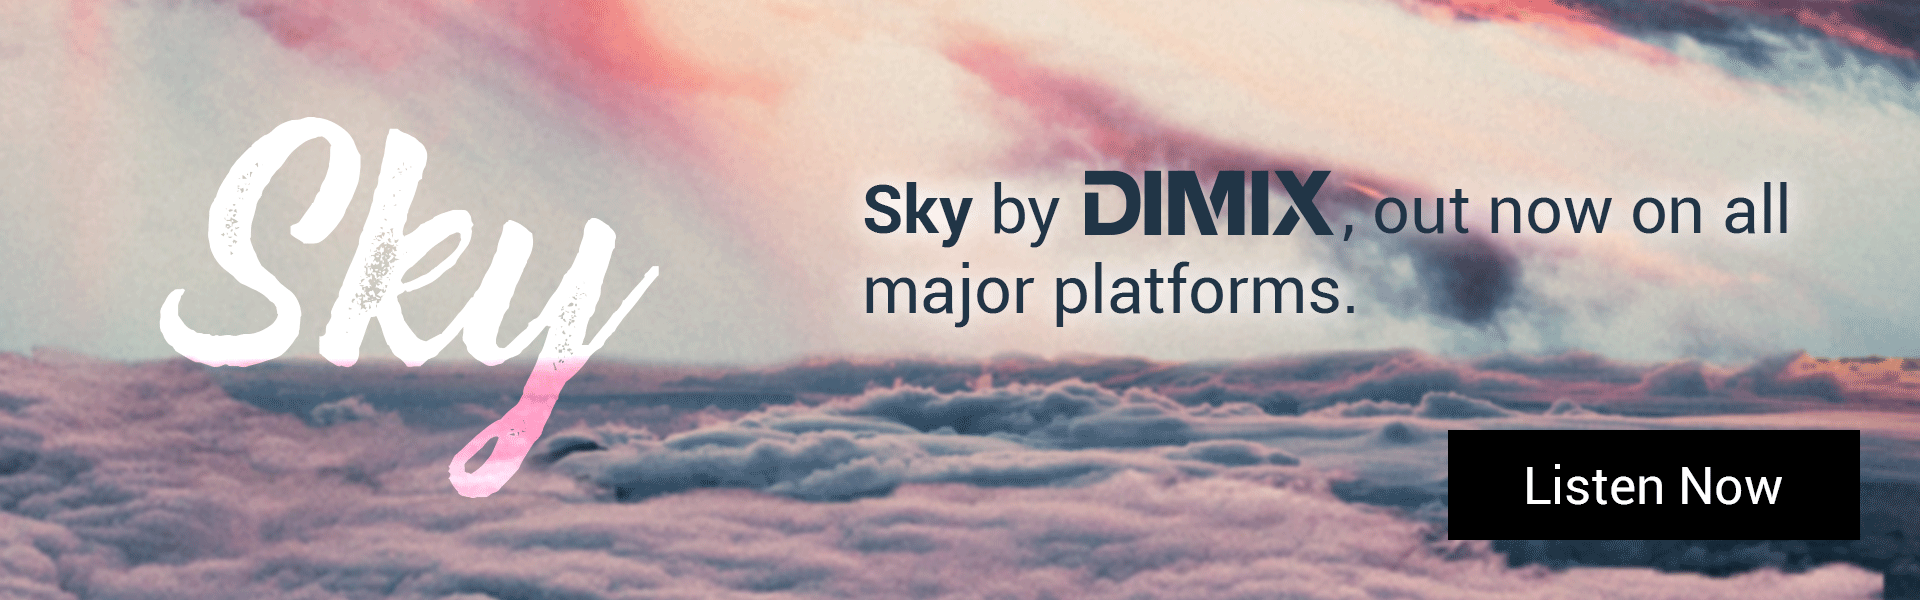 Banner for DIMIX 'Sky'